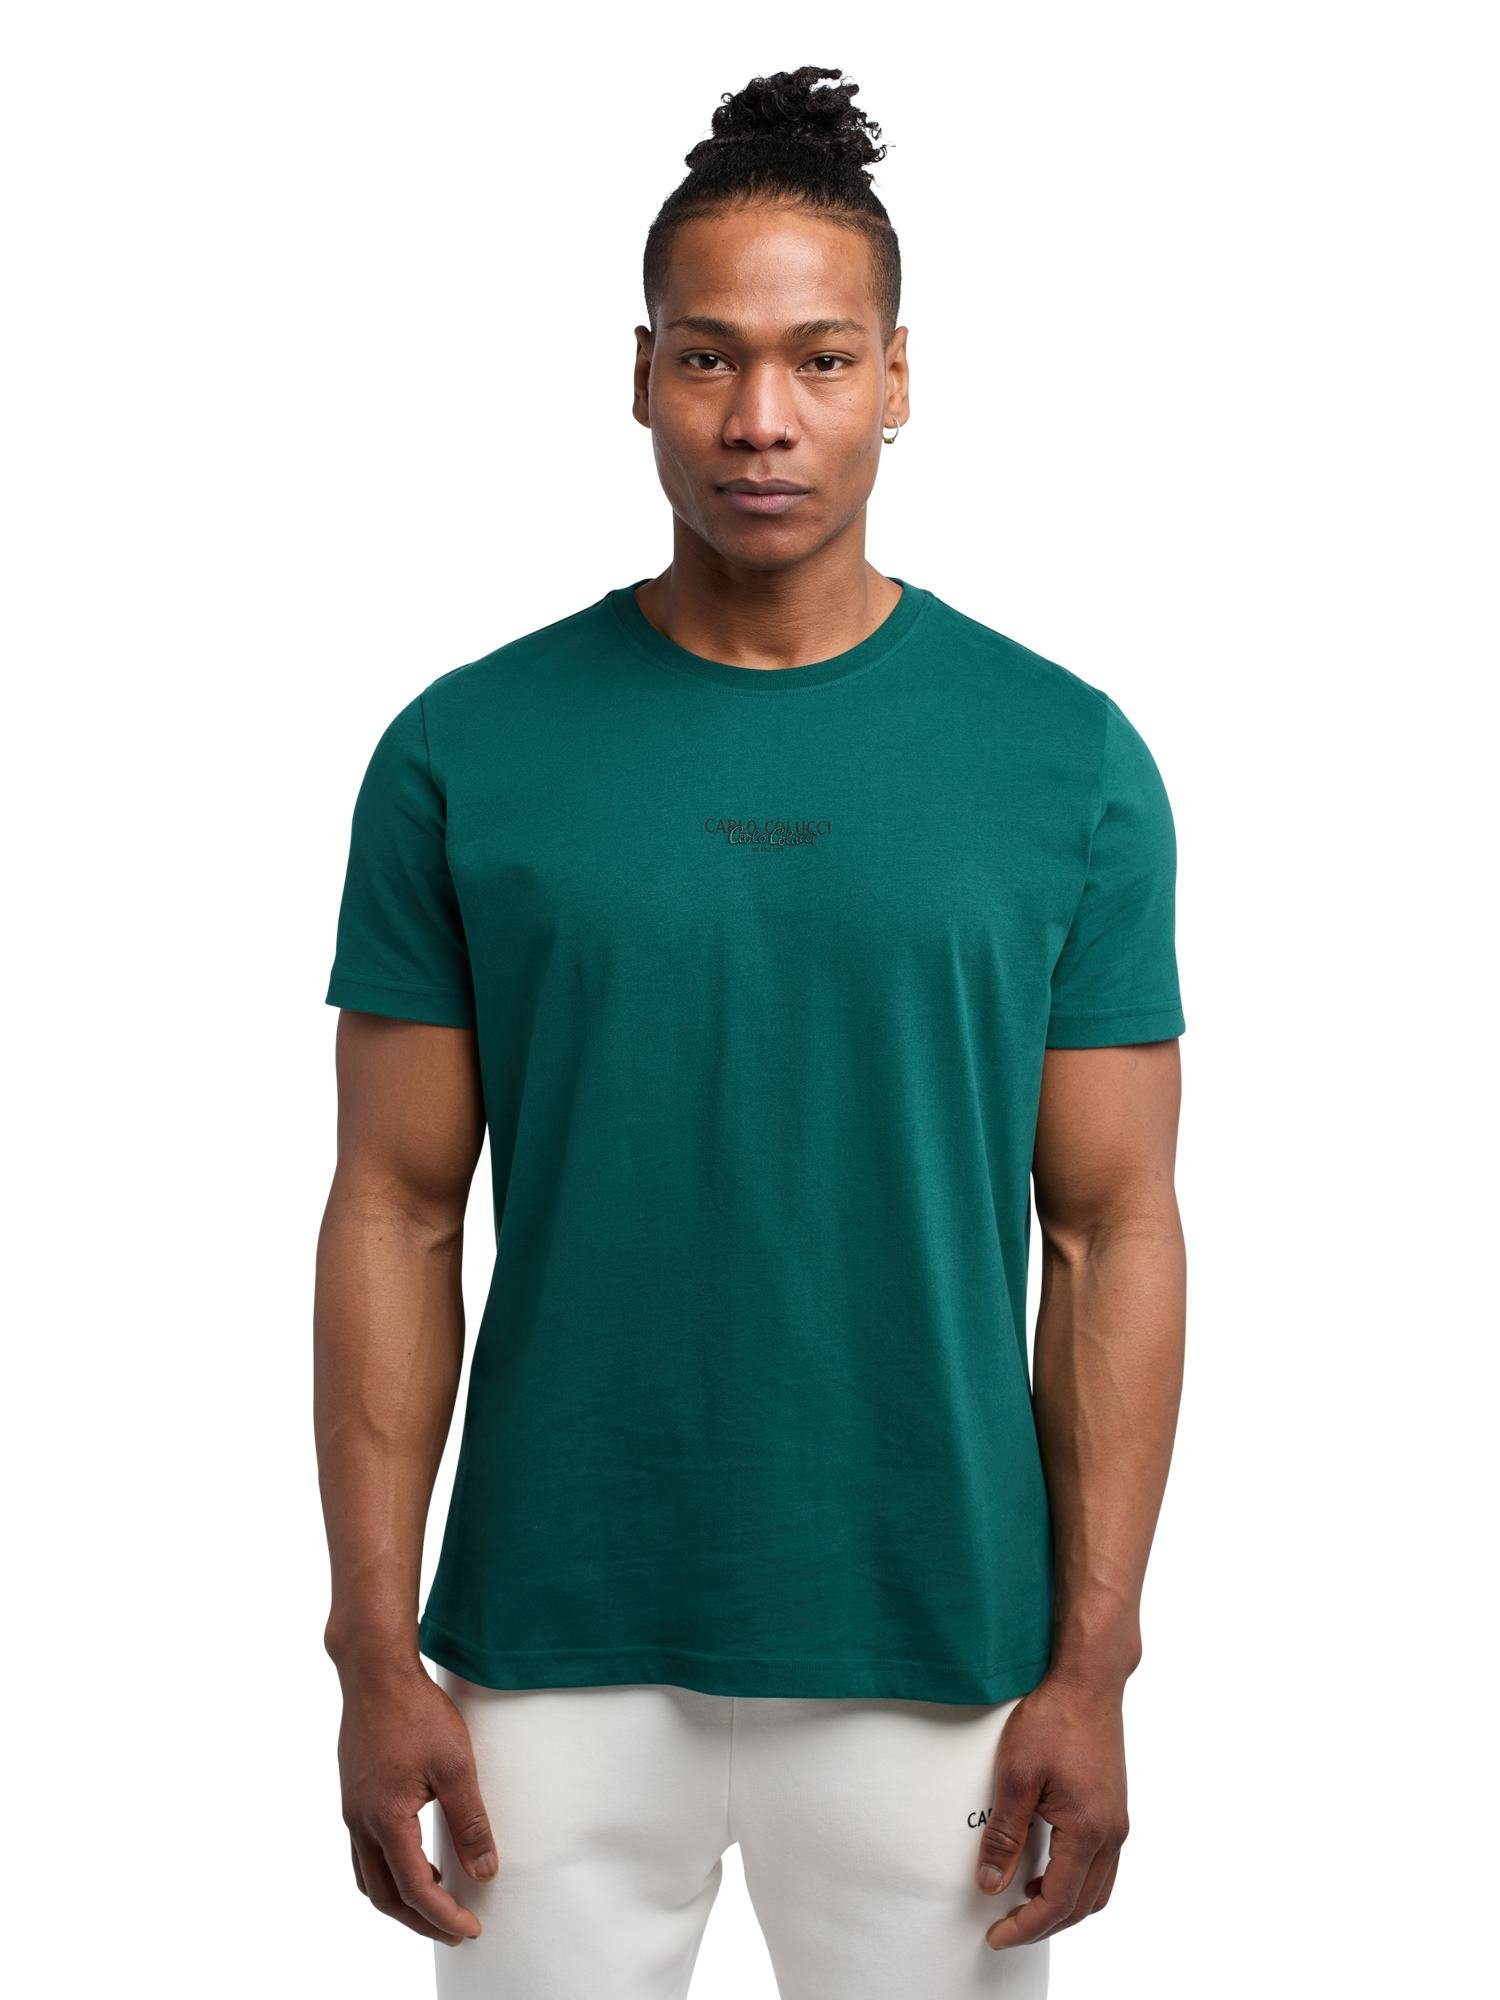 CARLO COLUCCI T-Shirt Grün Salvador De